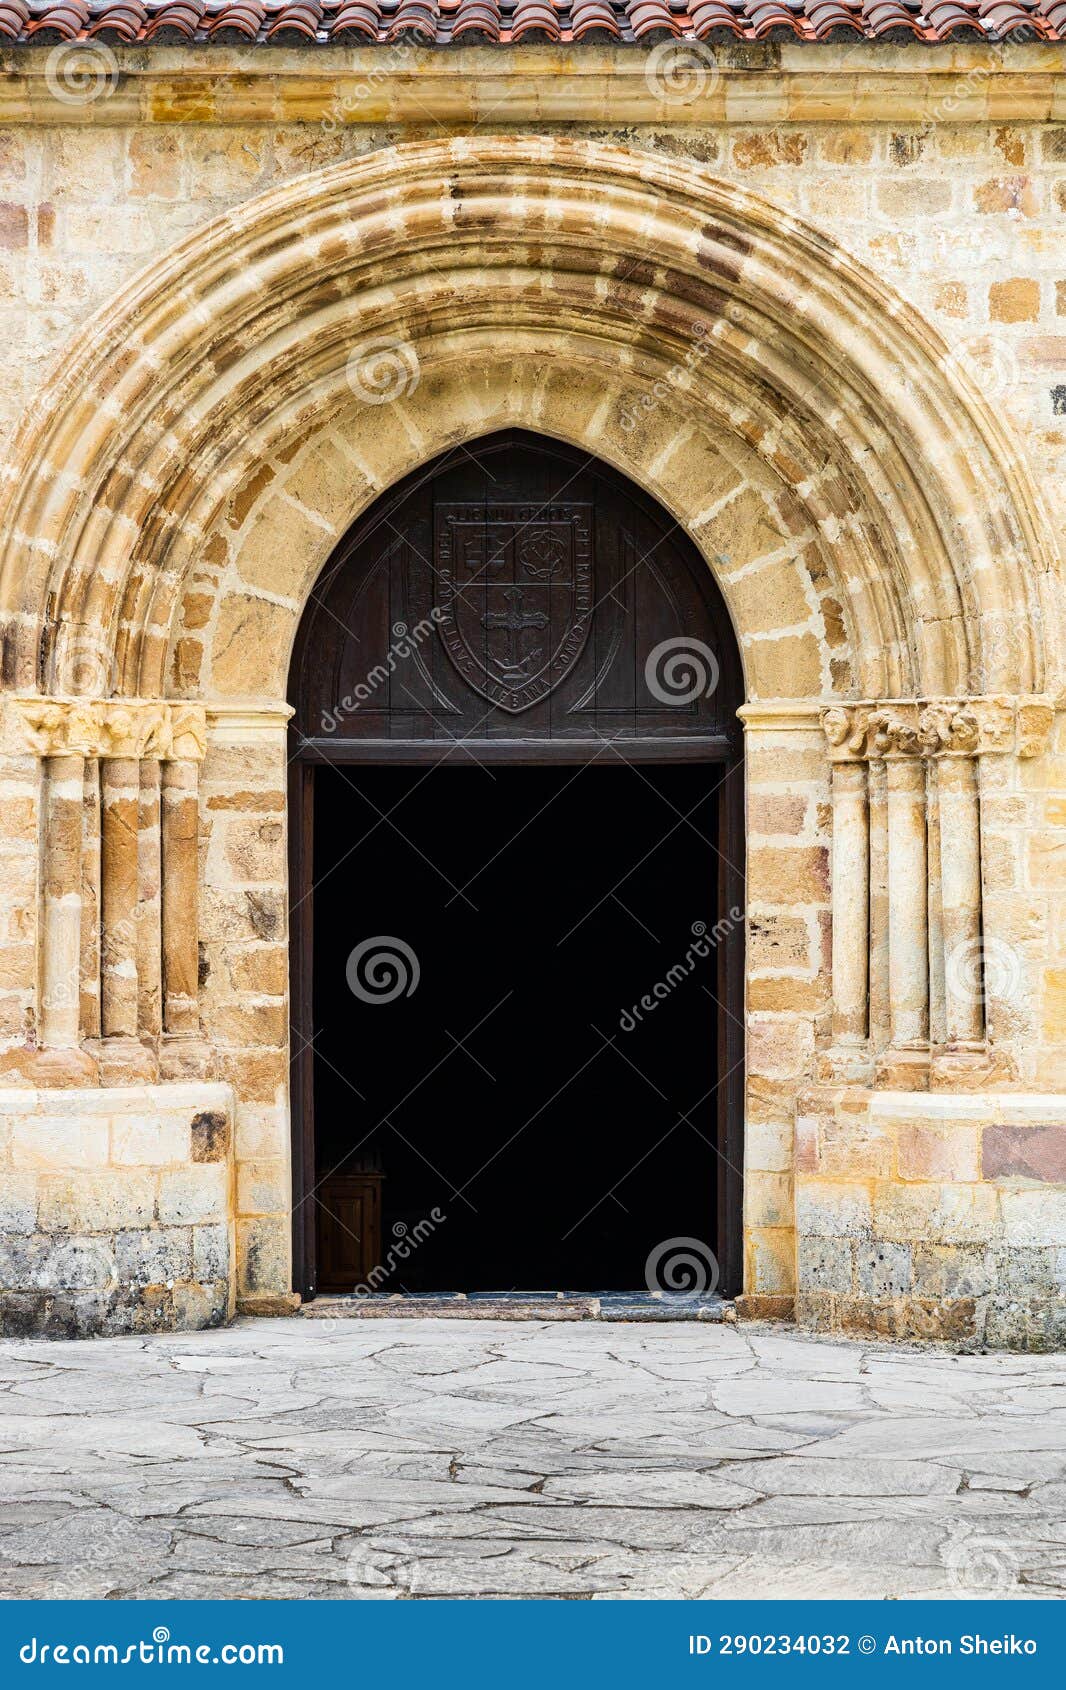 doorway with multiple stone arches. monastery of santo toribio de liebana. cantabria, spain